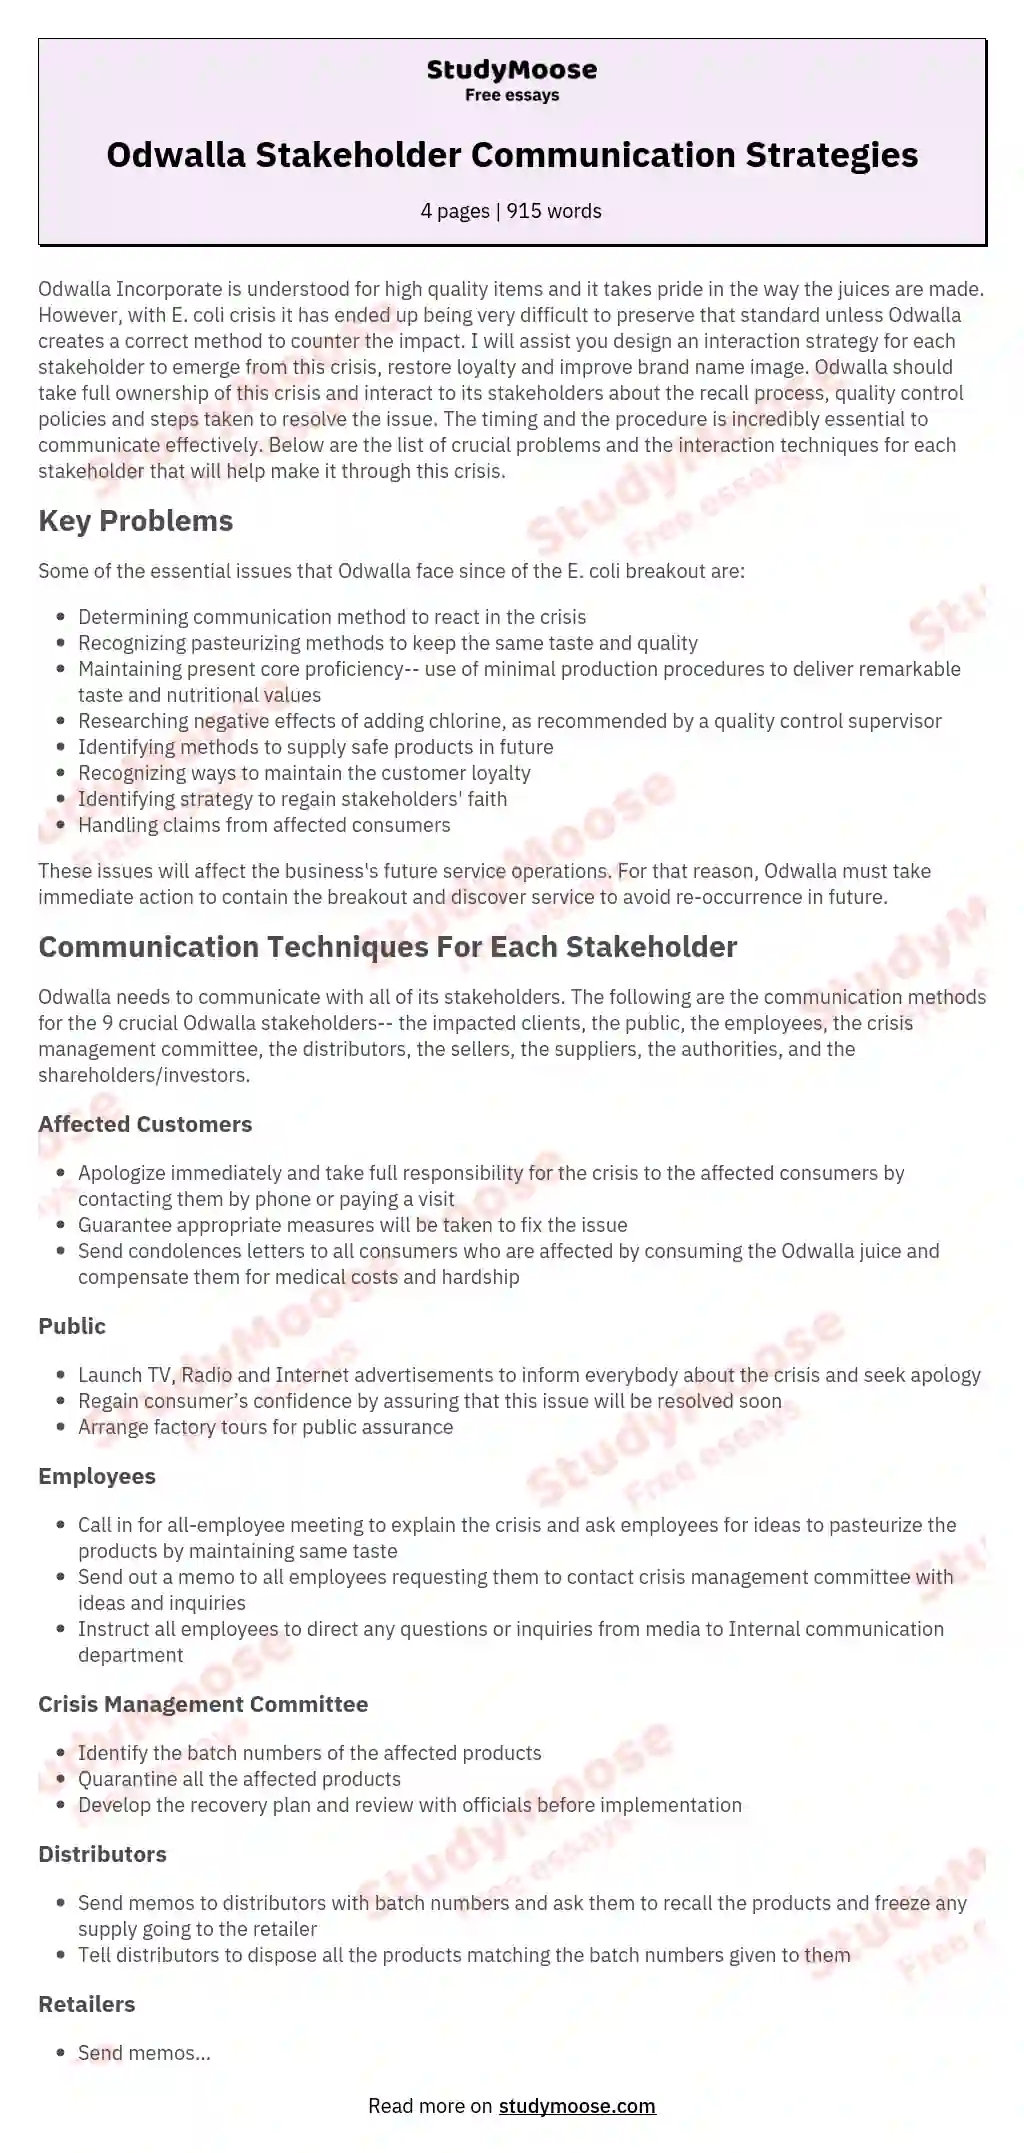 Odwalla Stakeholder Communication Strategies essay